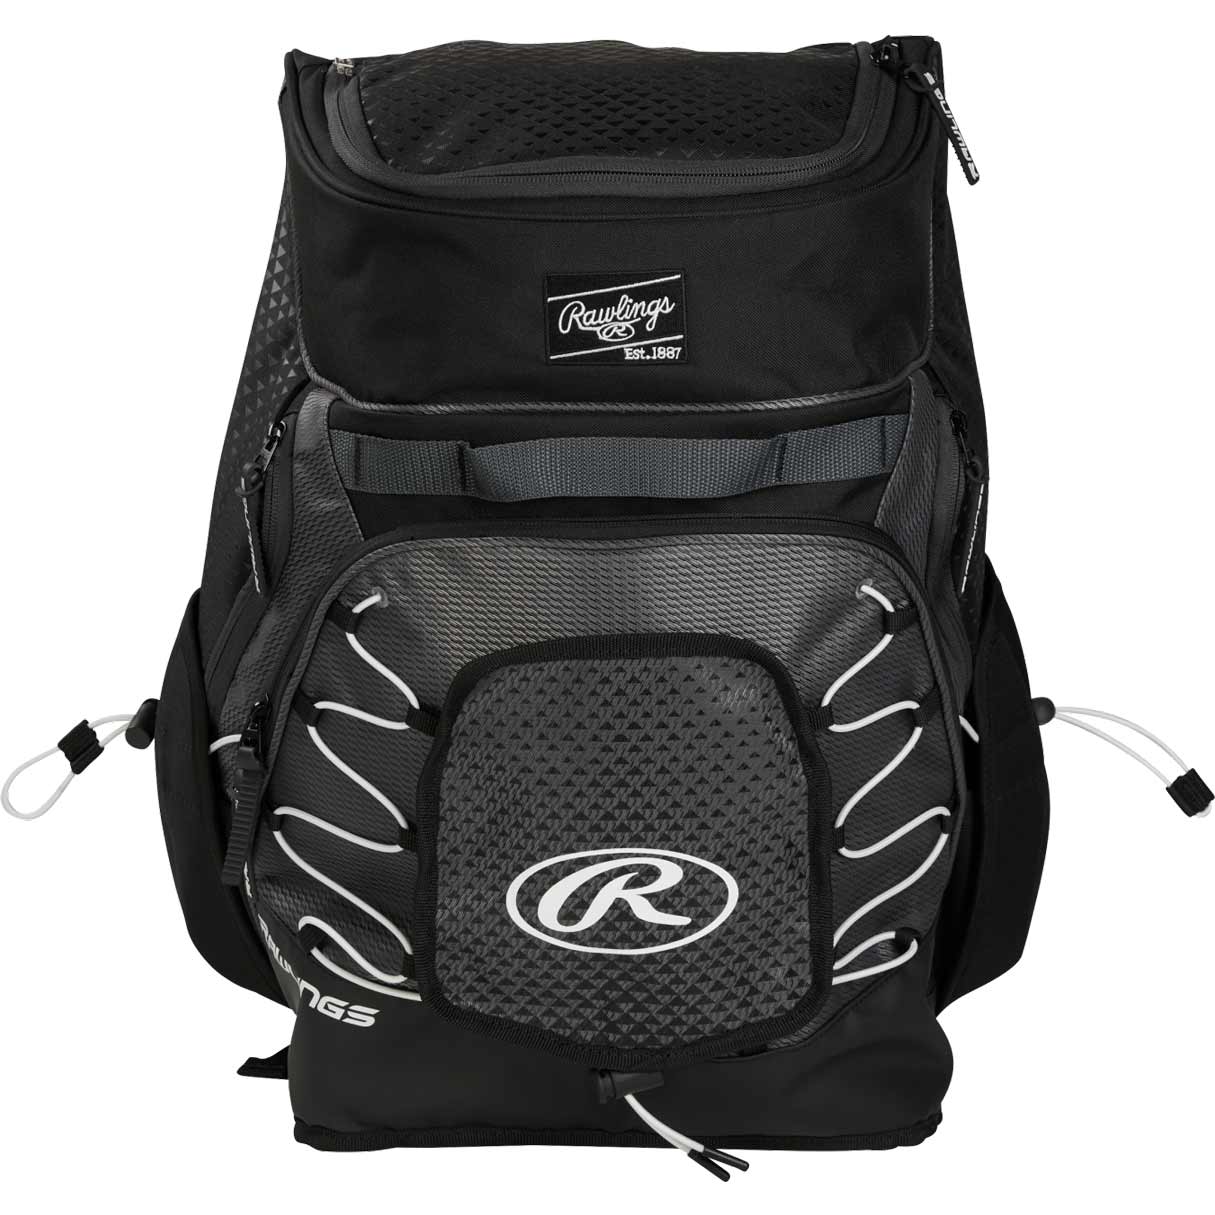 Rawlings R800 Softball Backpack